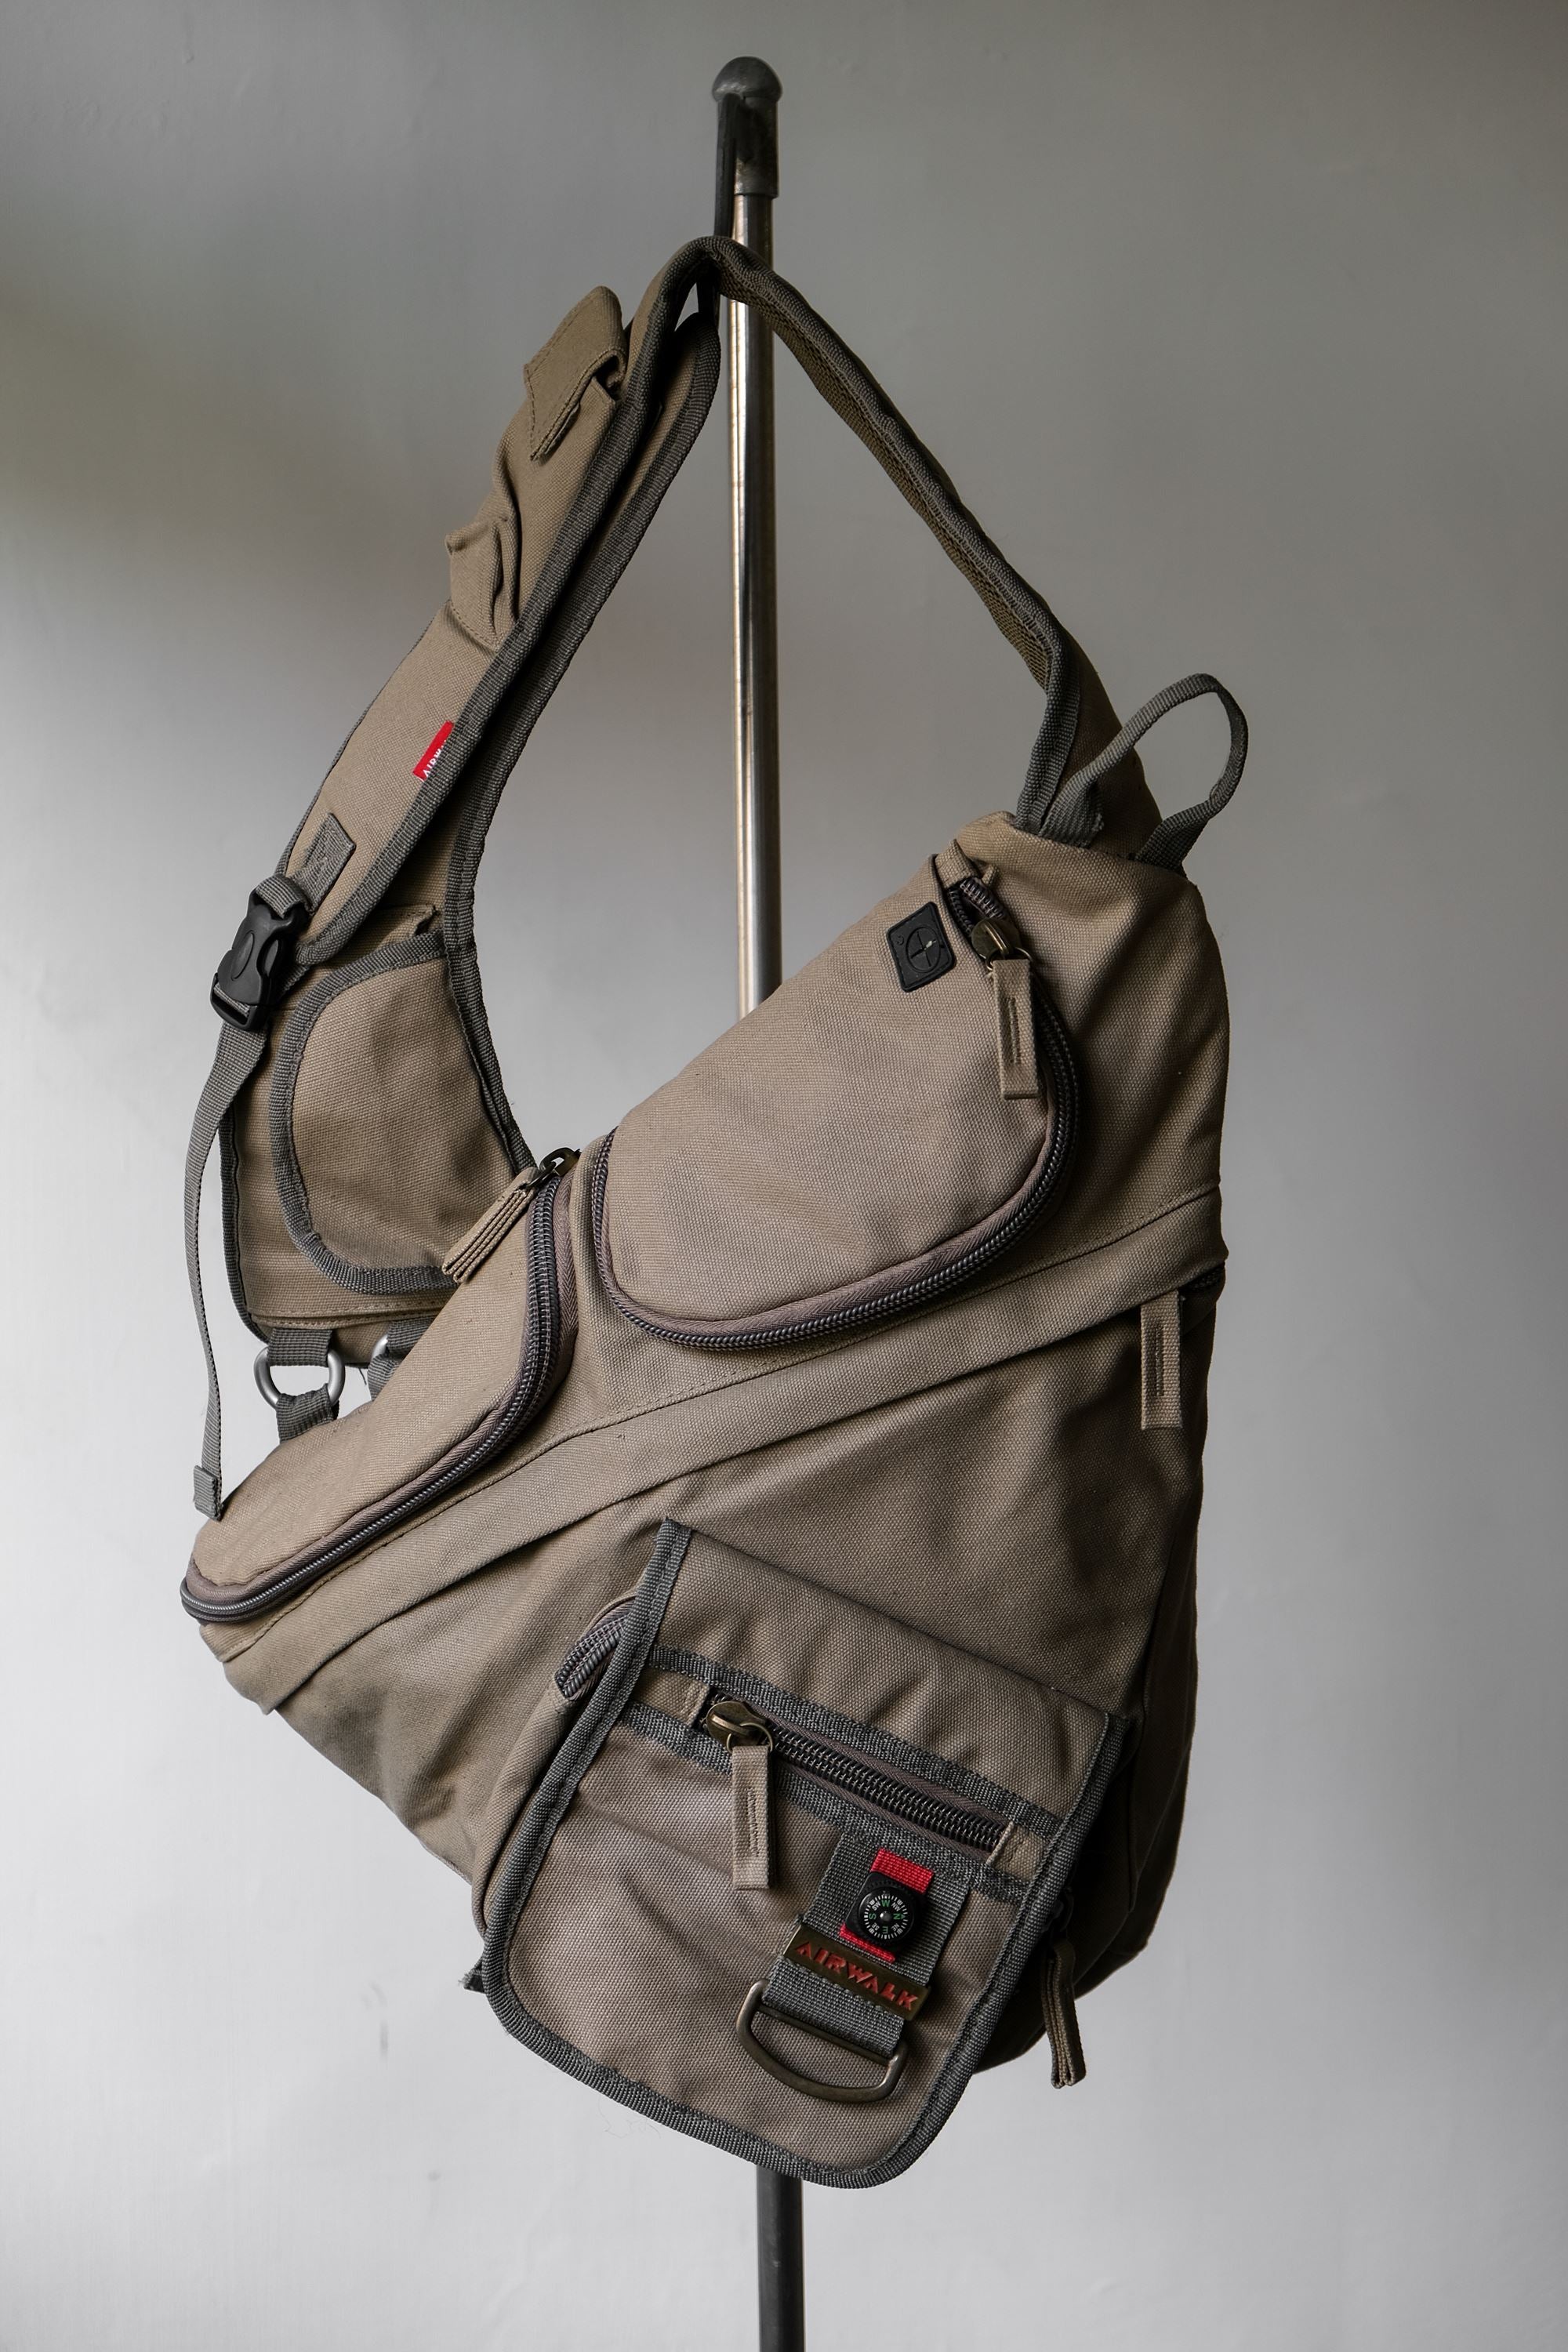 Airwalk backpack For laptop/... - Mali Safi Bags Parlour | Facebook